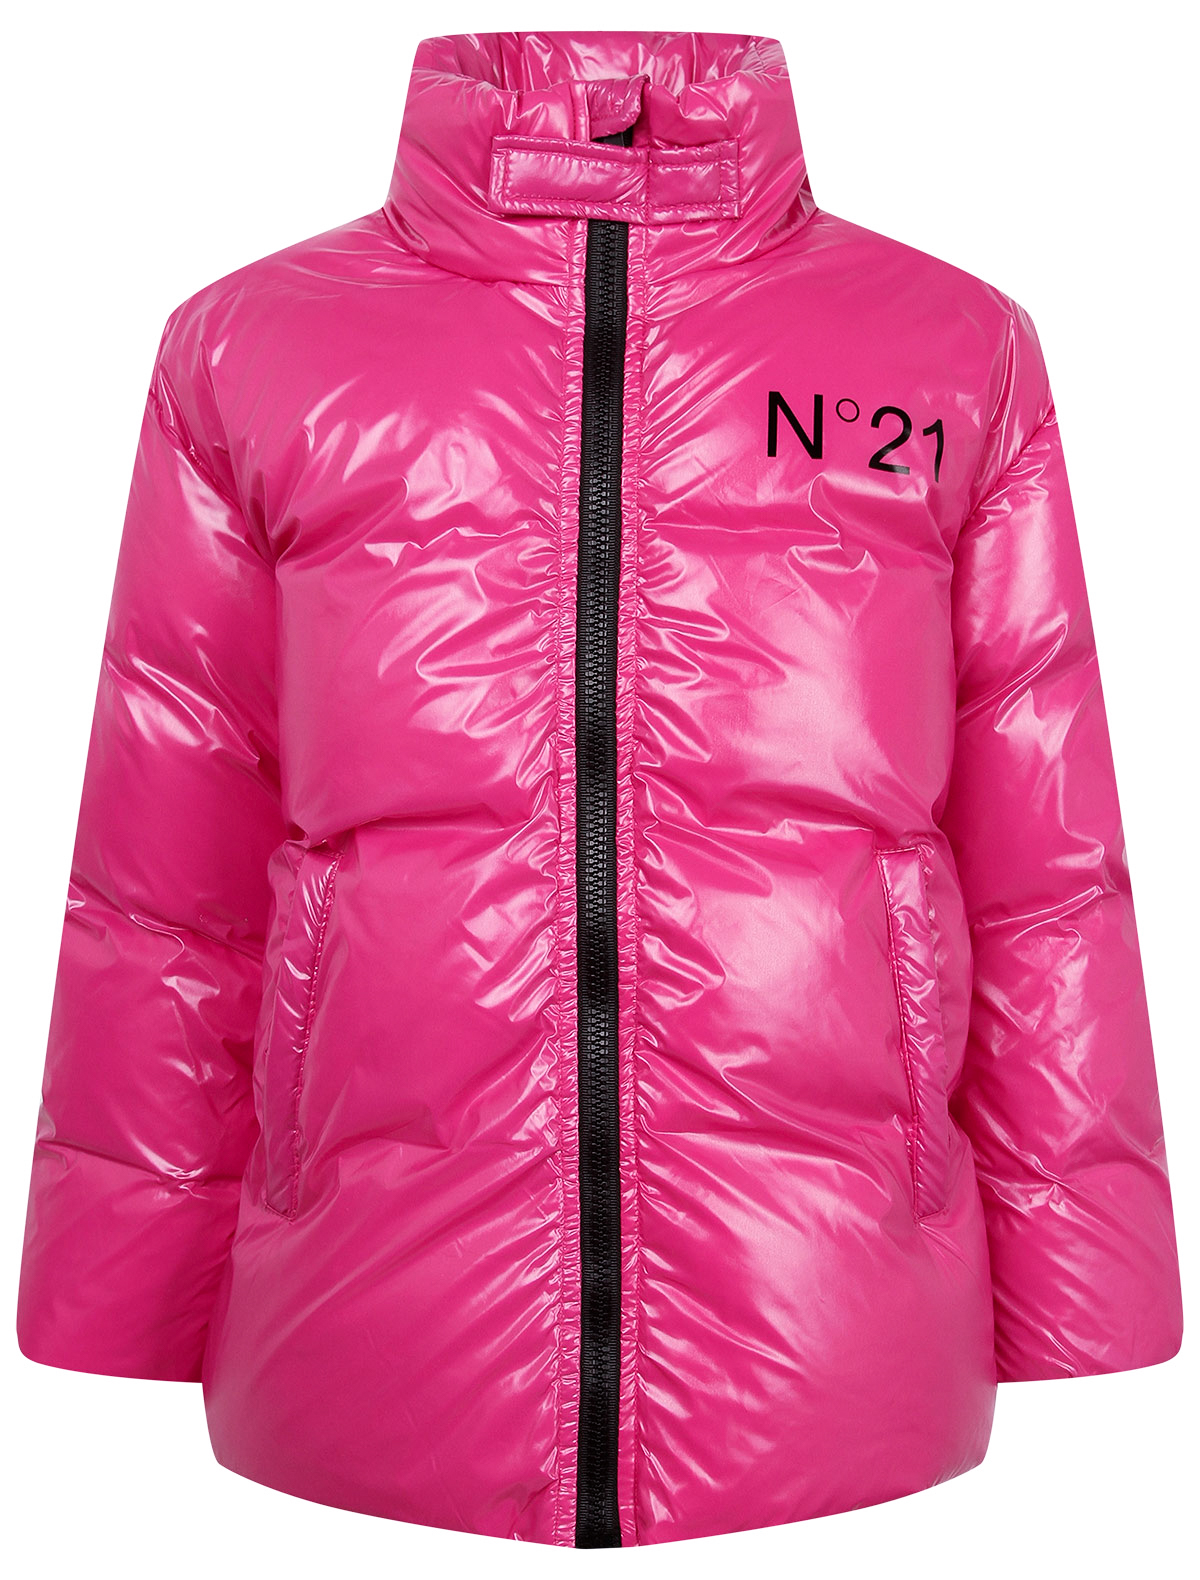 Куртка №21 kids 2233286, цвет розовый, размер 9 1074509081401 - фото 1